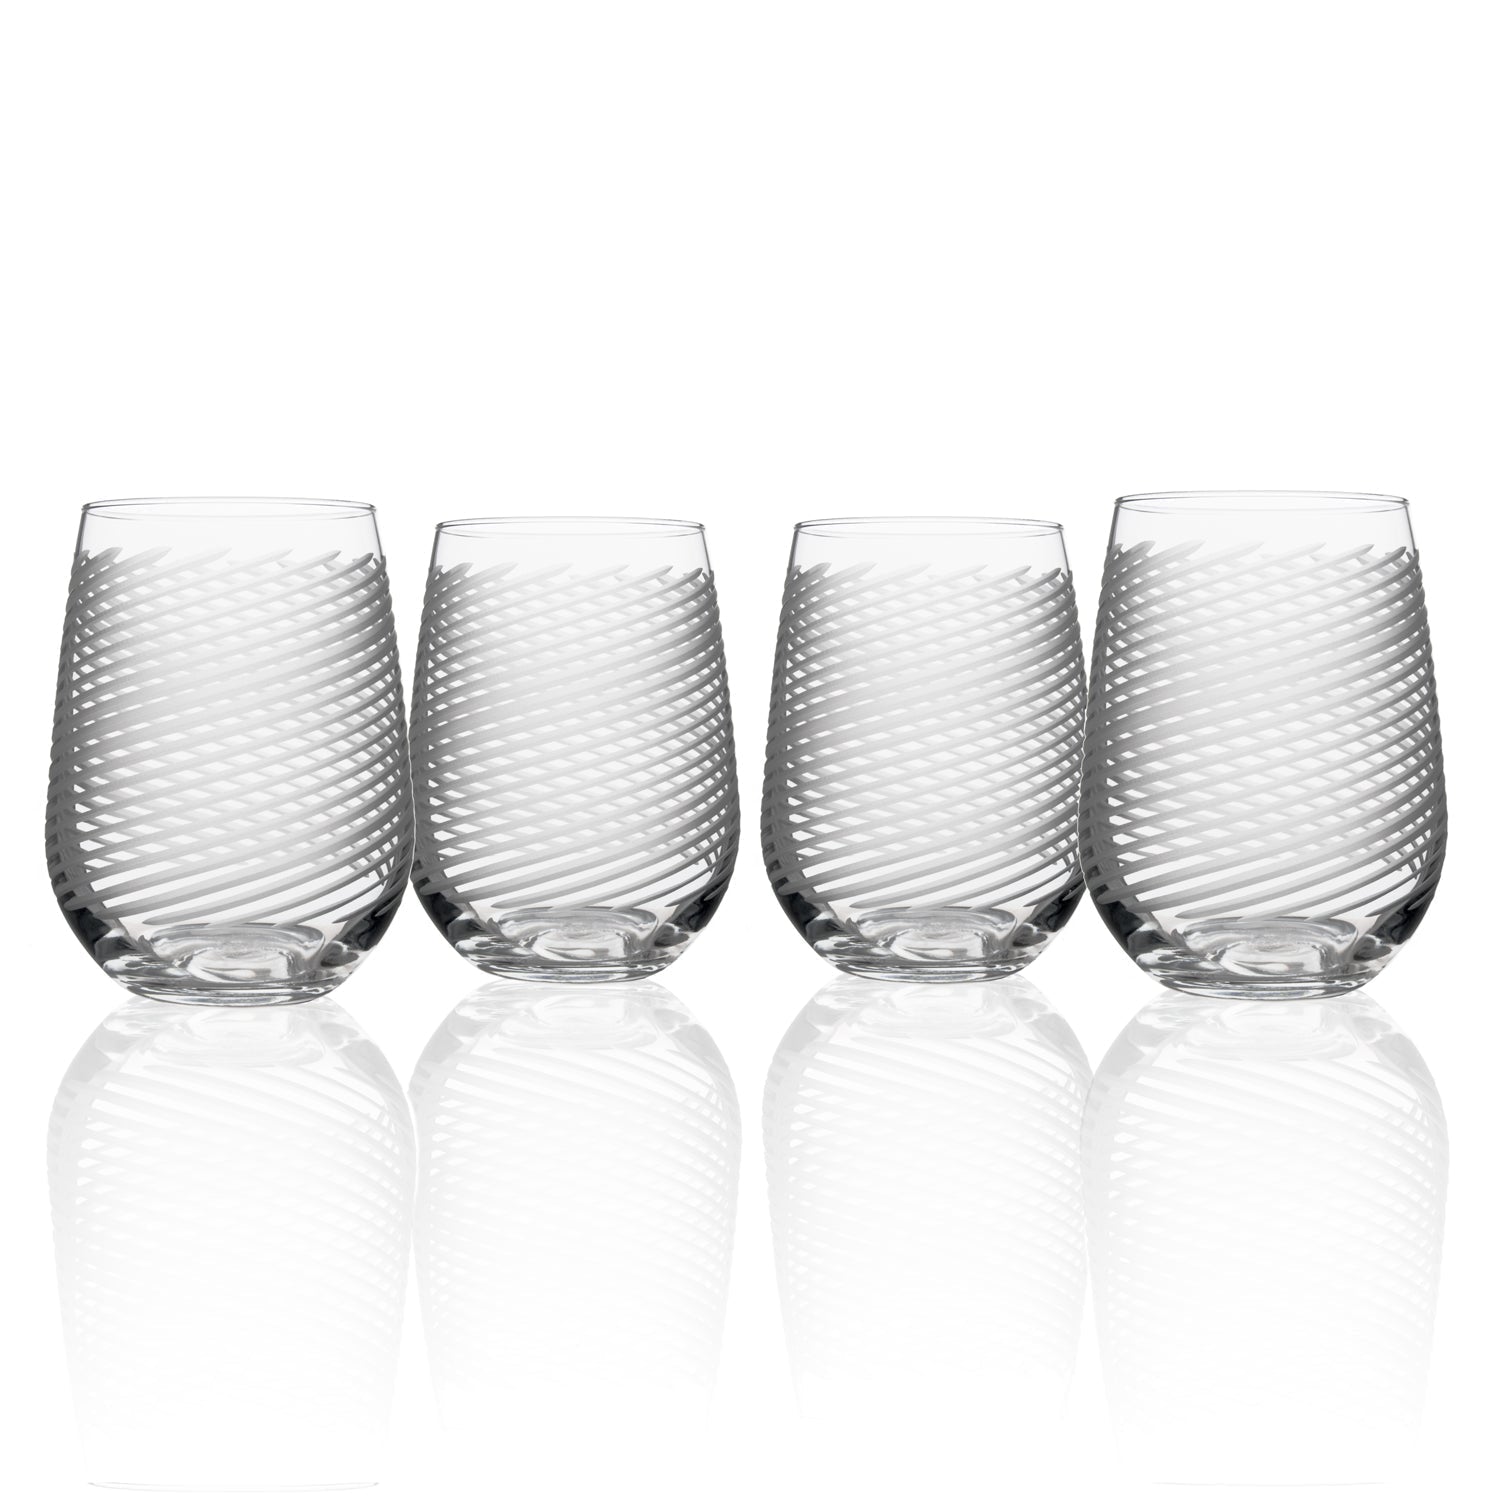 Cyclone 17oz Stemless Wine Glass Set of 4 - Barware - Tipplergoods